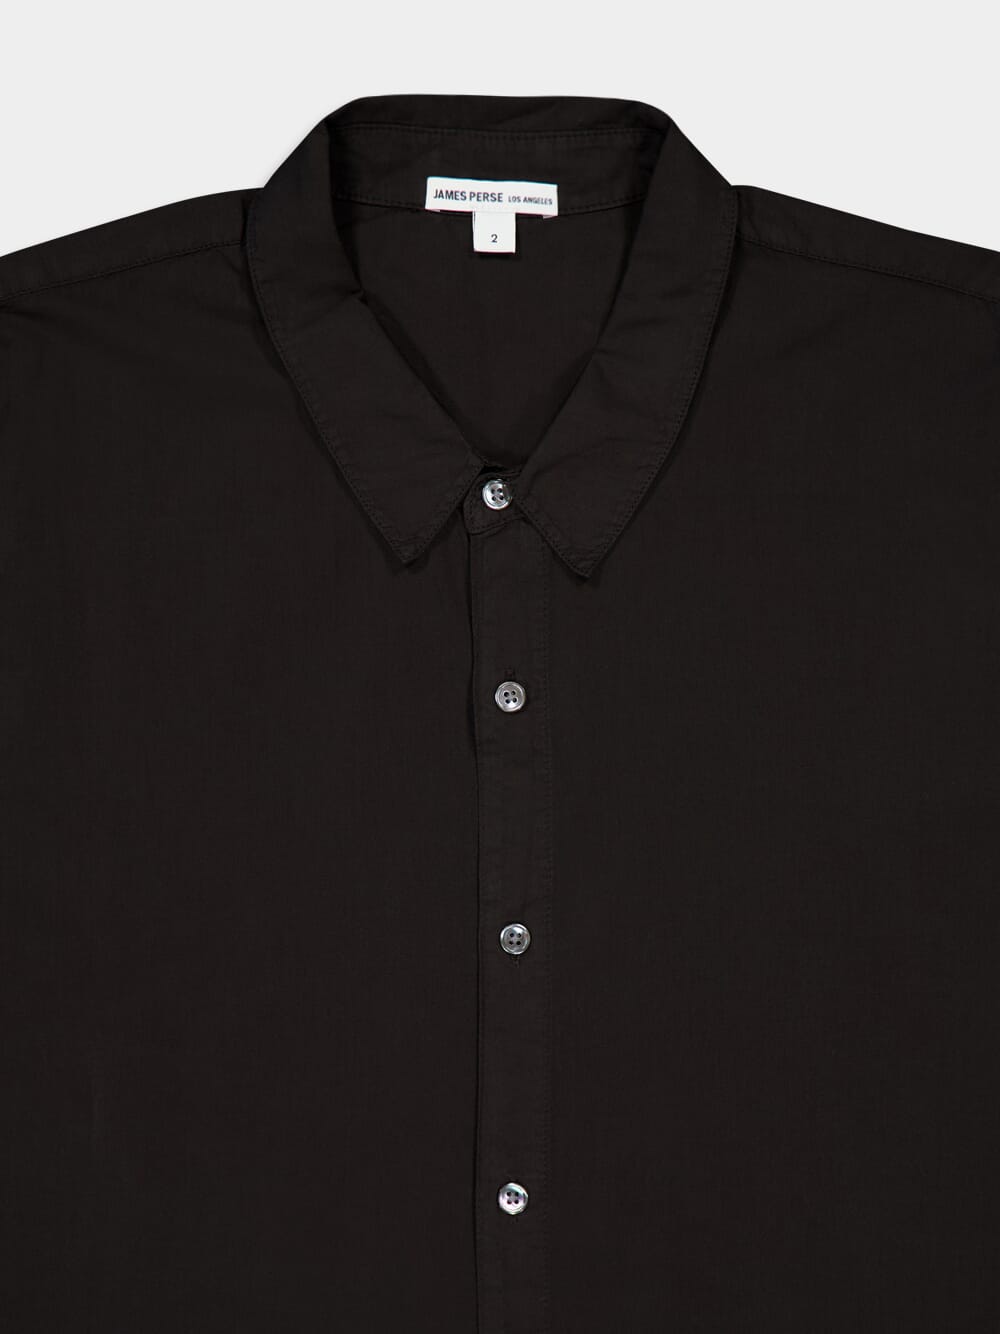 Classic Black Cotton Shirt